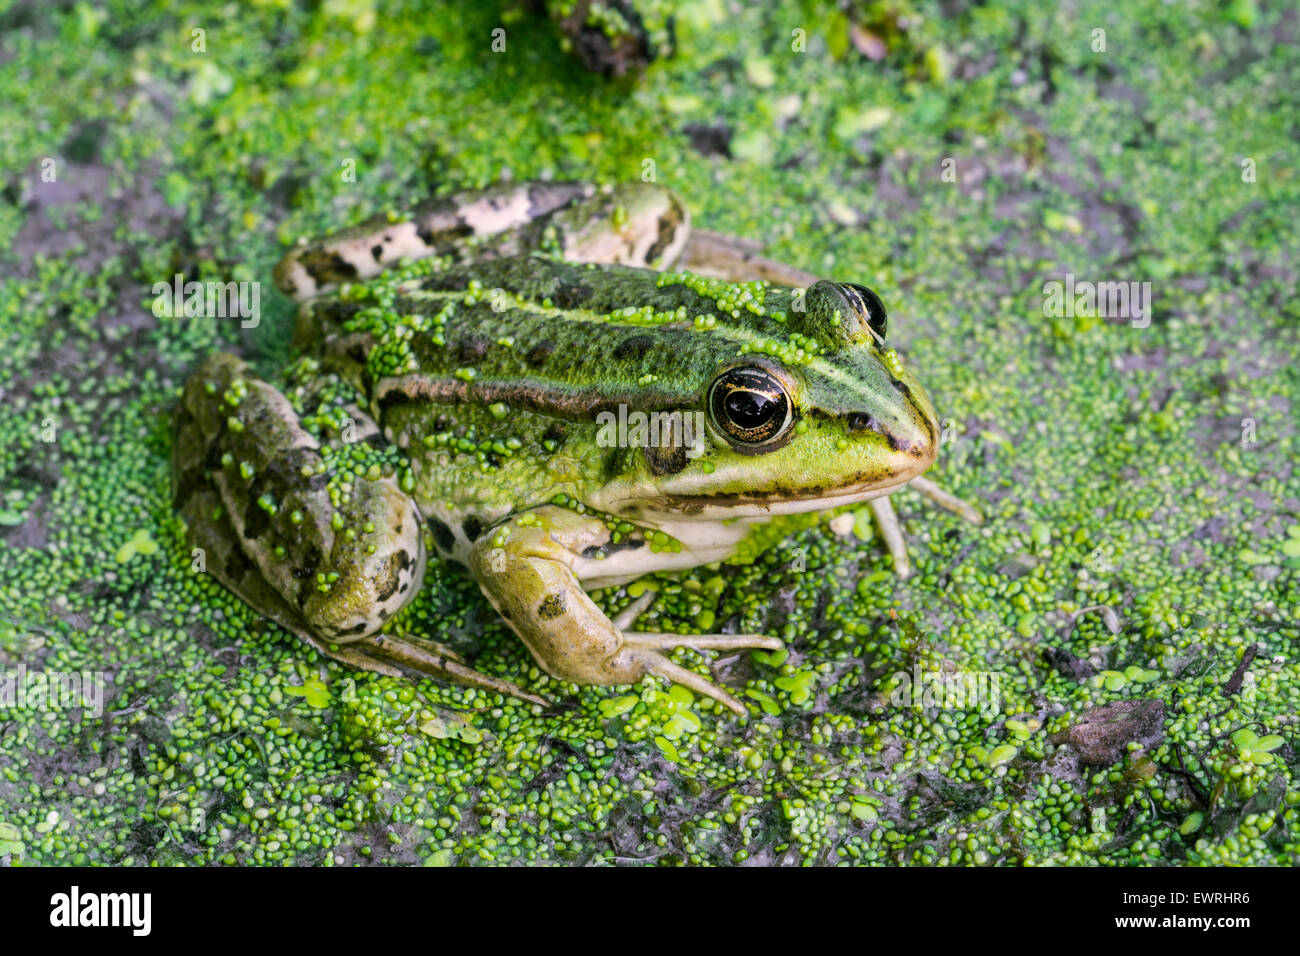 Rana verde / acqua comune / rana rana verde (Pelophylax kl. esculentus / Rana kl. esculenta) seduto tra lenticchie d'acqua in stagno Foto Stock